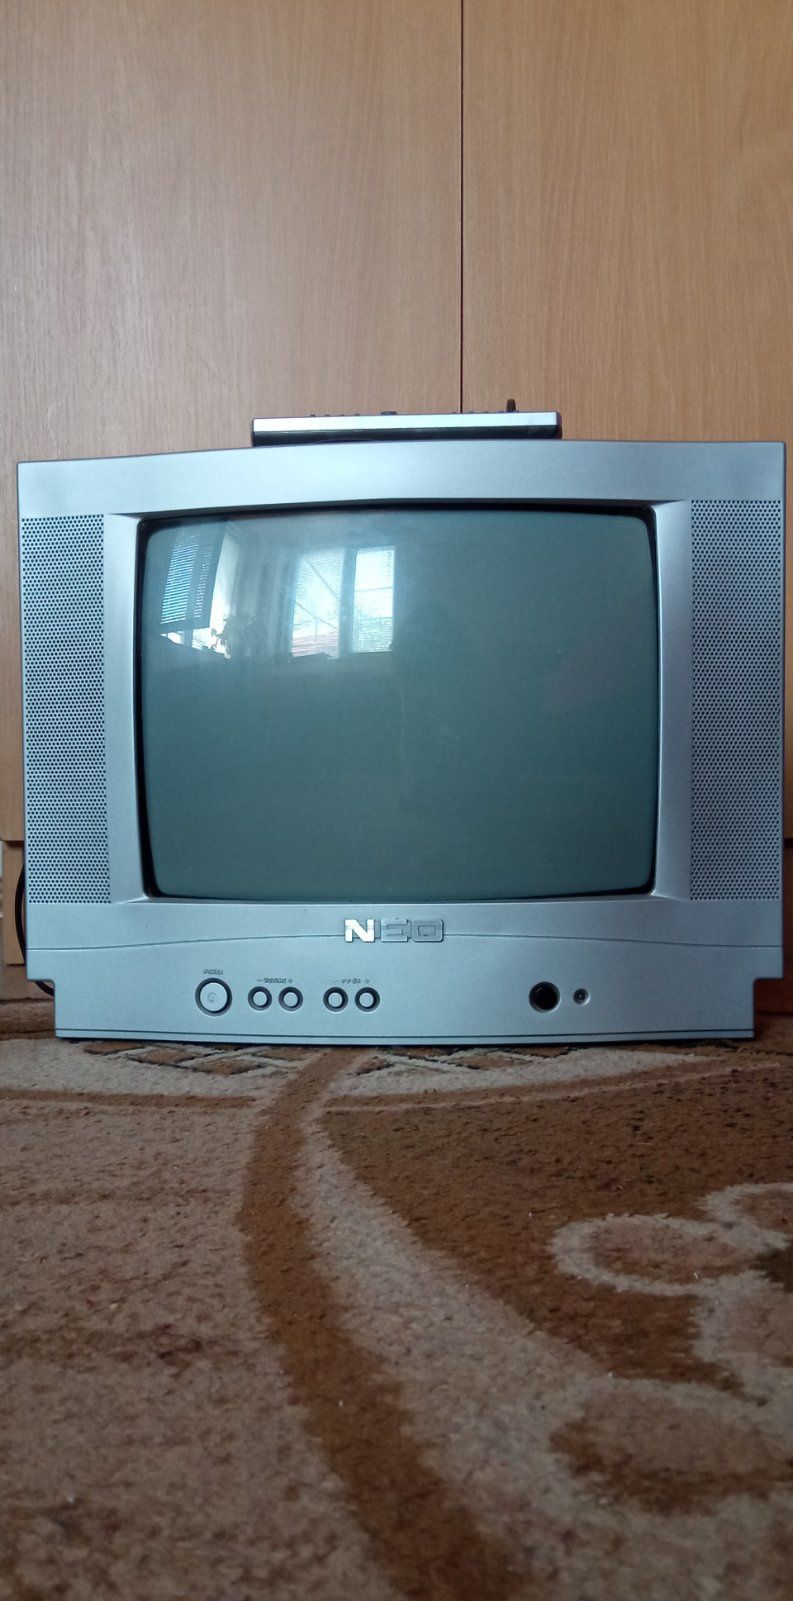 Цветен телевизор "Neo" - 14 инча с кинескоп